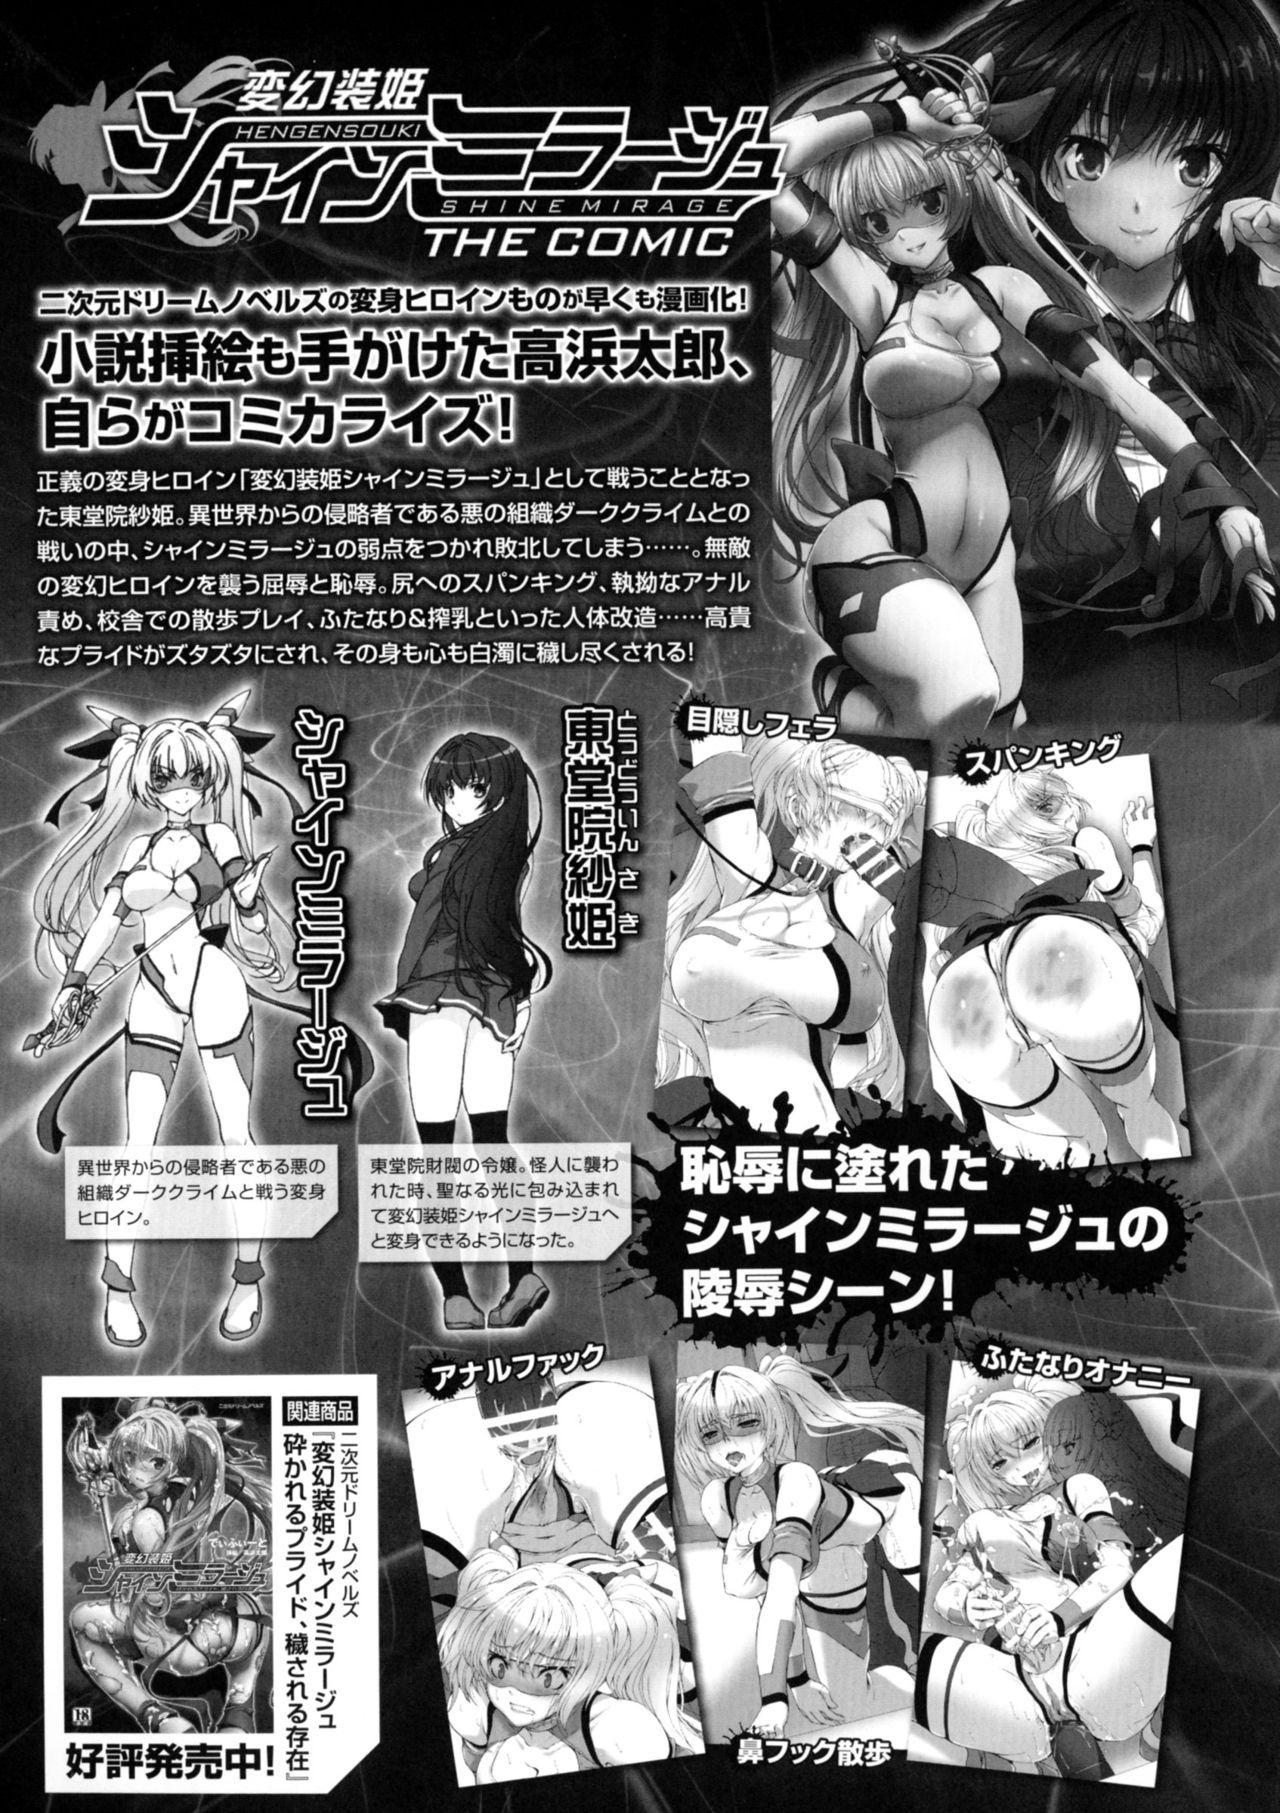 Seigi no Heroine Kangoku File DX Vol. 4 48